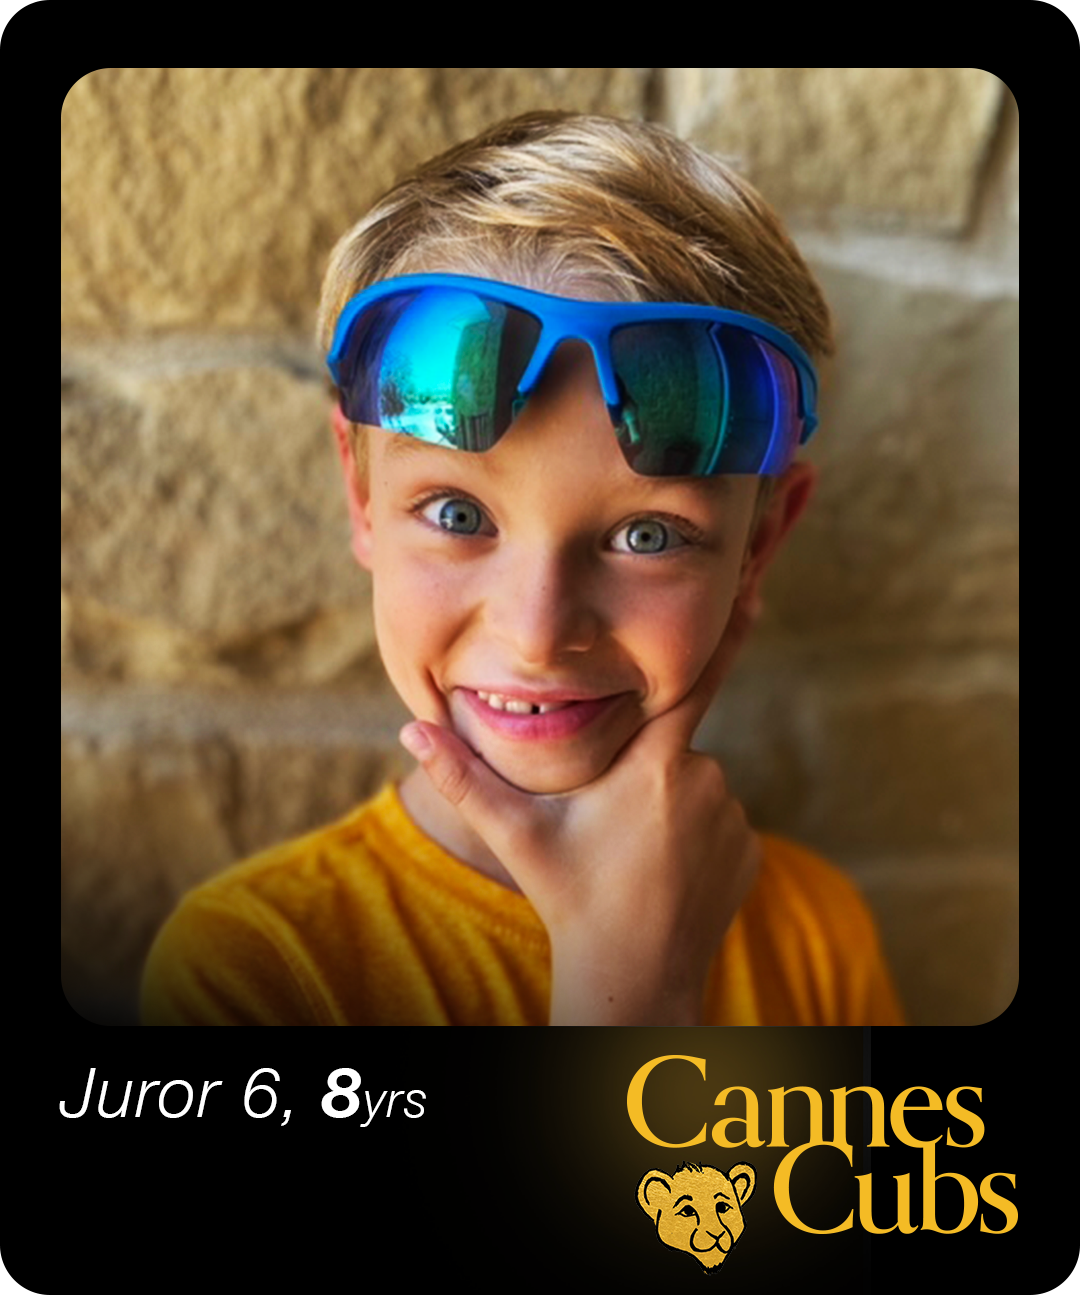 Cannes Cubs juror 6.png